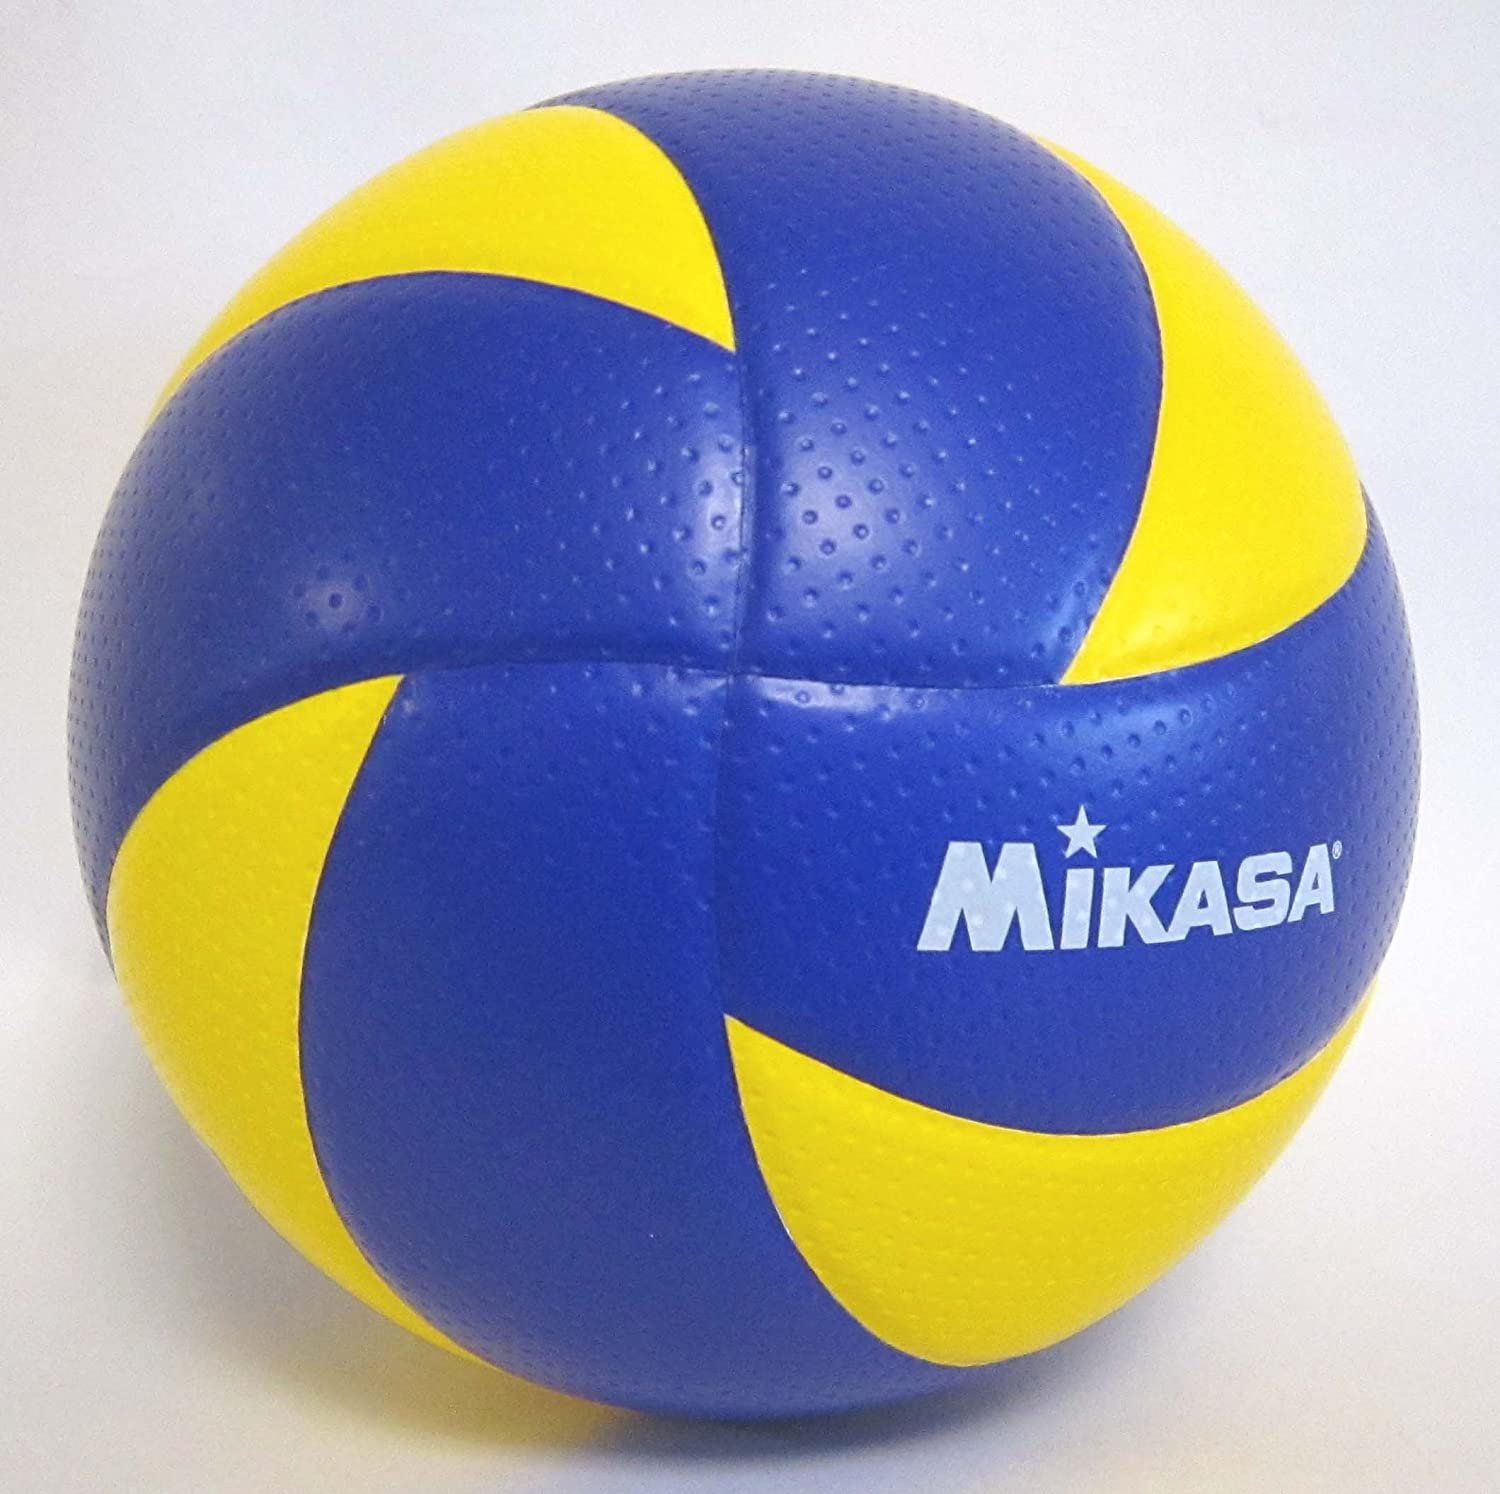 Мяч микаса оригинал. Mikasa mva500. Мяч Микаса 500. Микаса волейбольный мяч 4 размер. Мяч Mikasa Kids Volleyball.